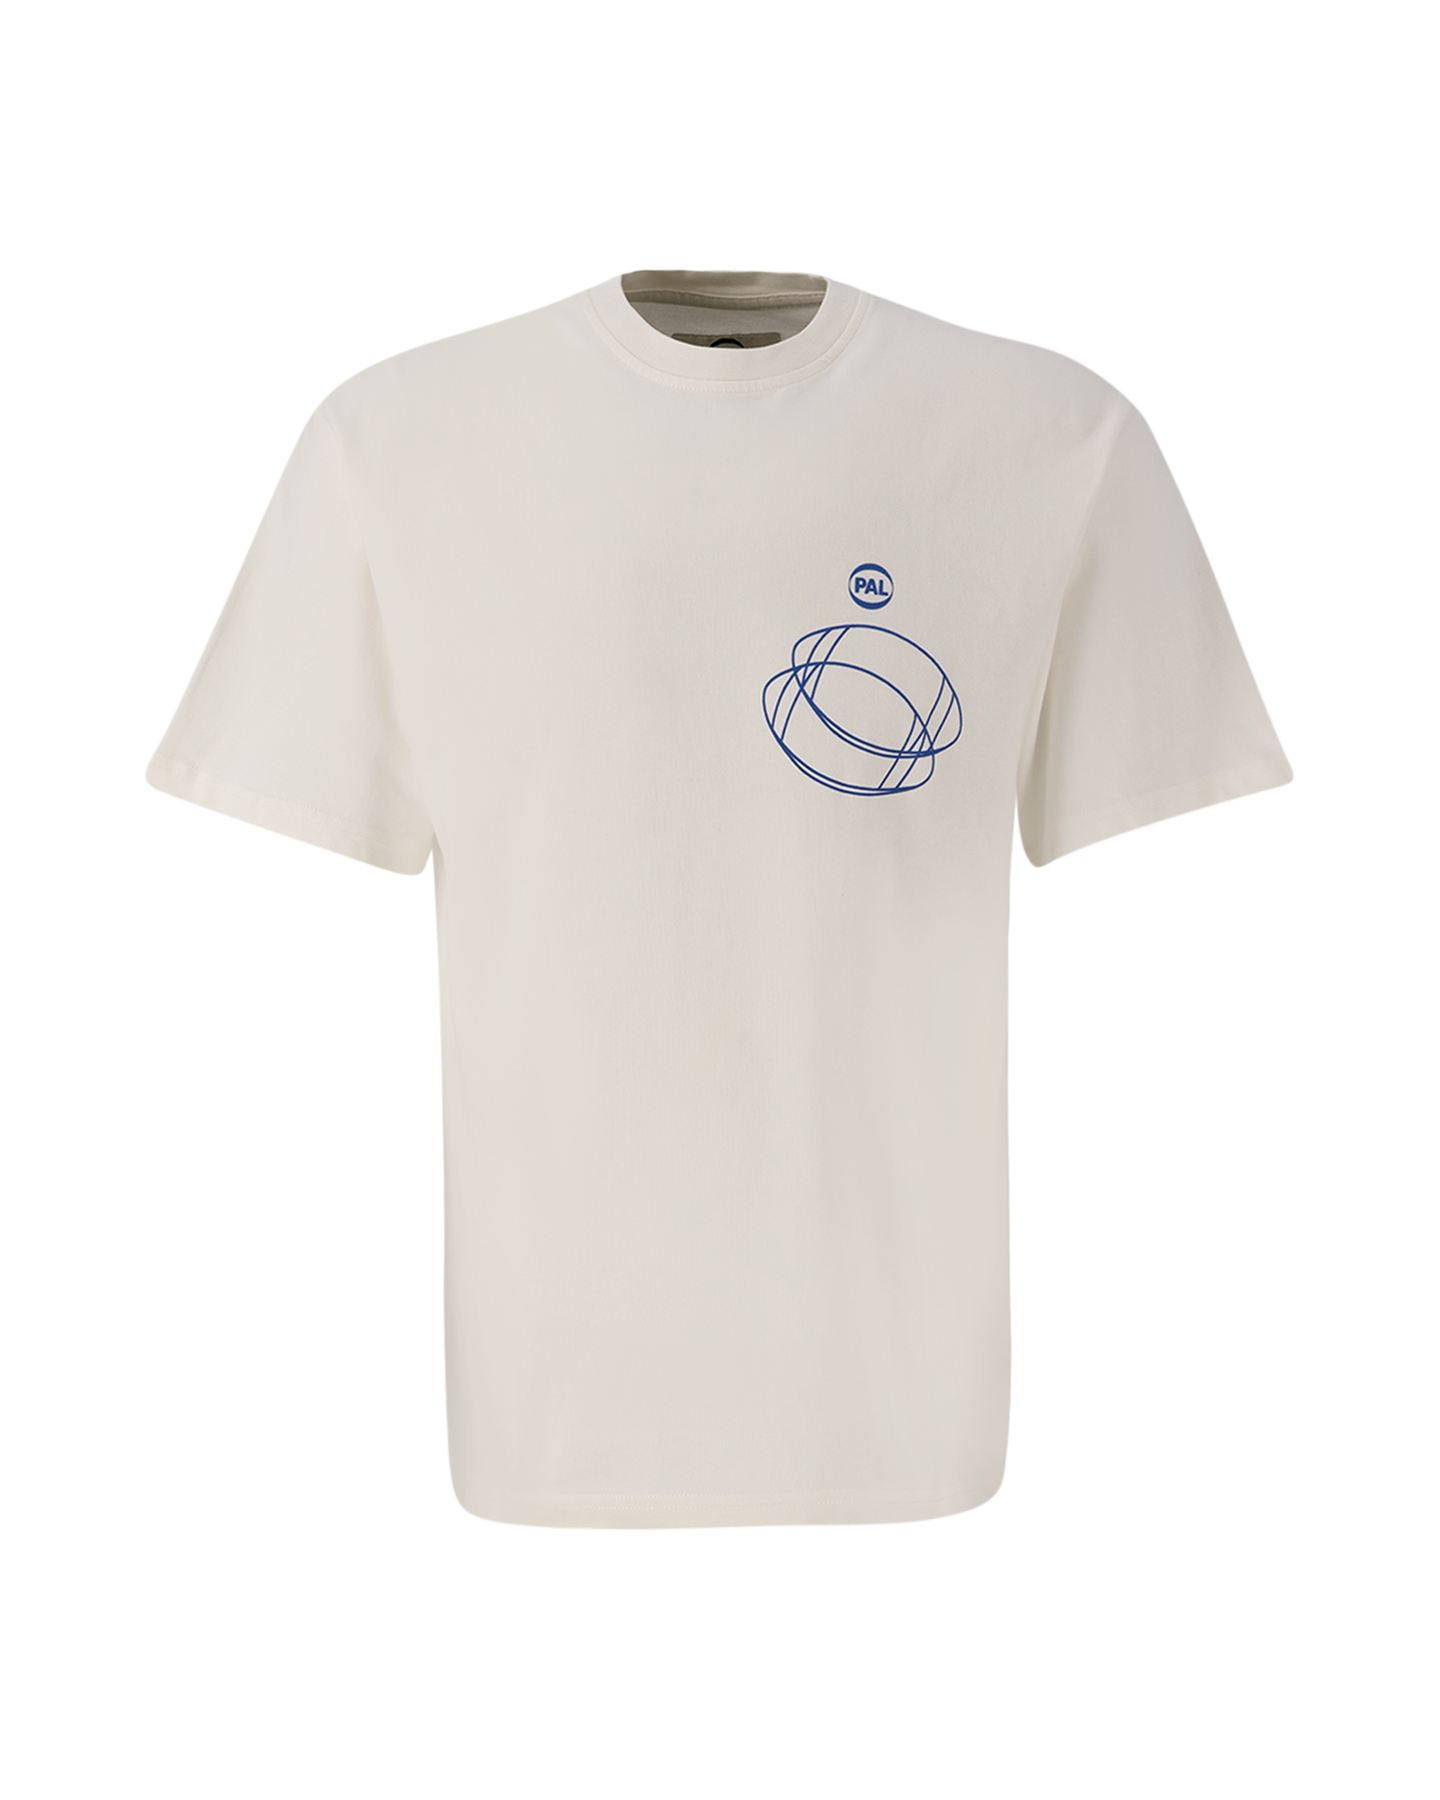 PAL Sporting Goods Frat 3.0 T-shirt OFFWHITE 2